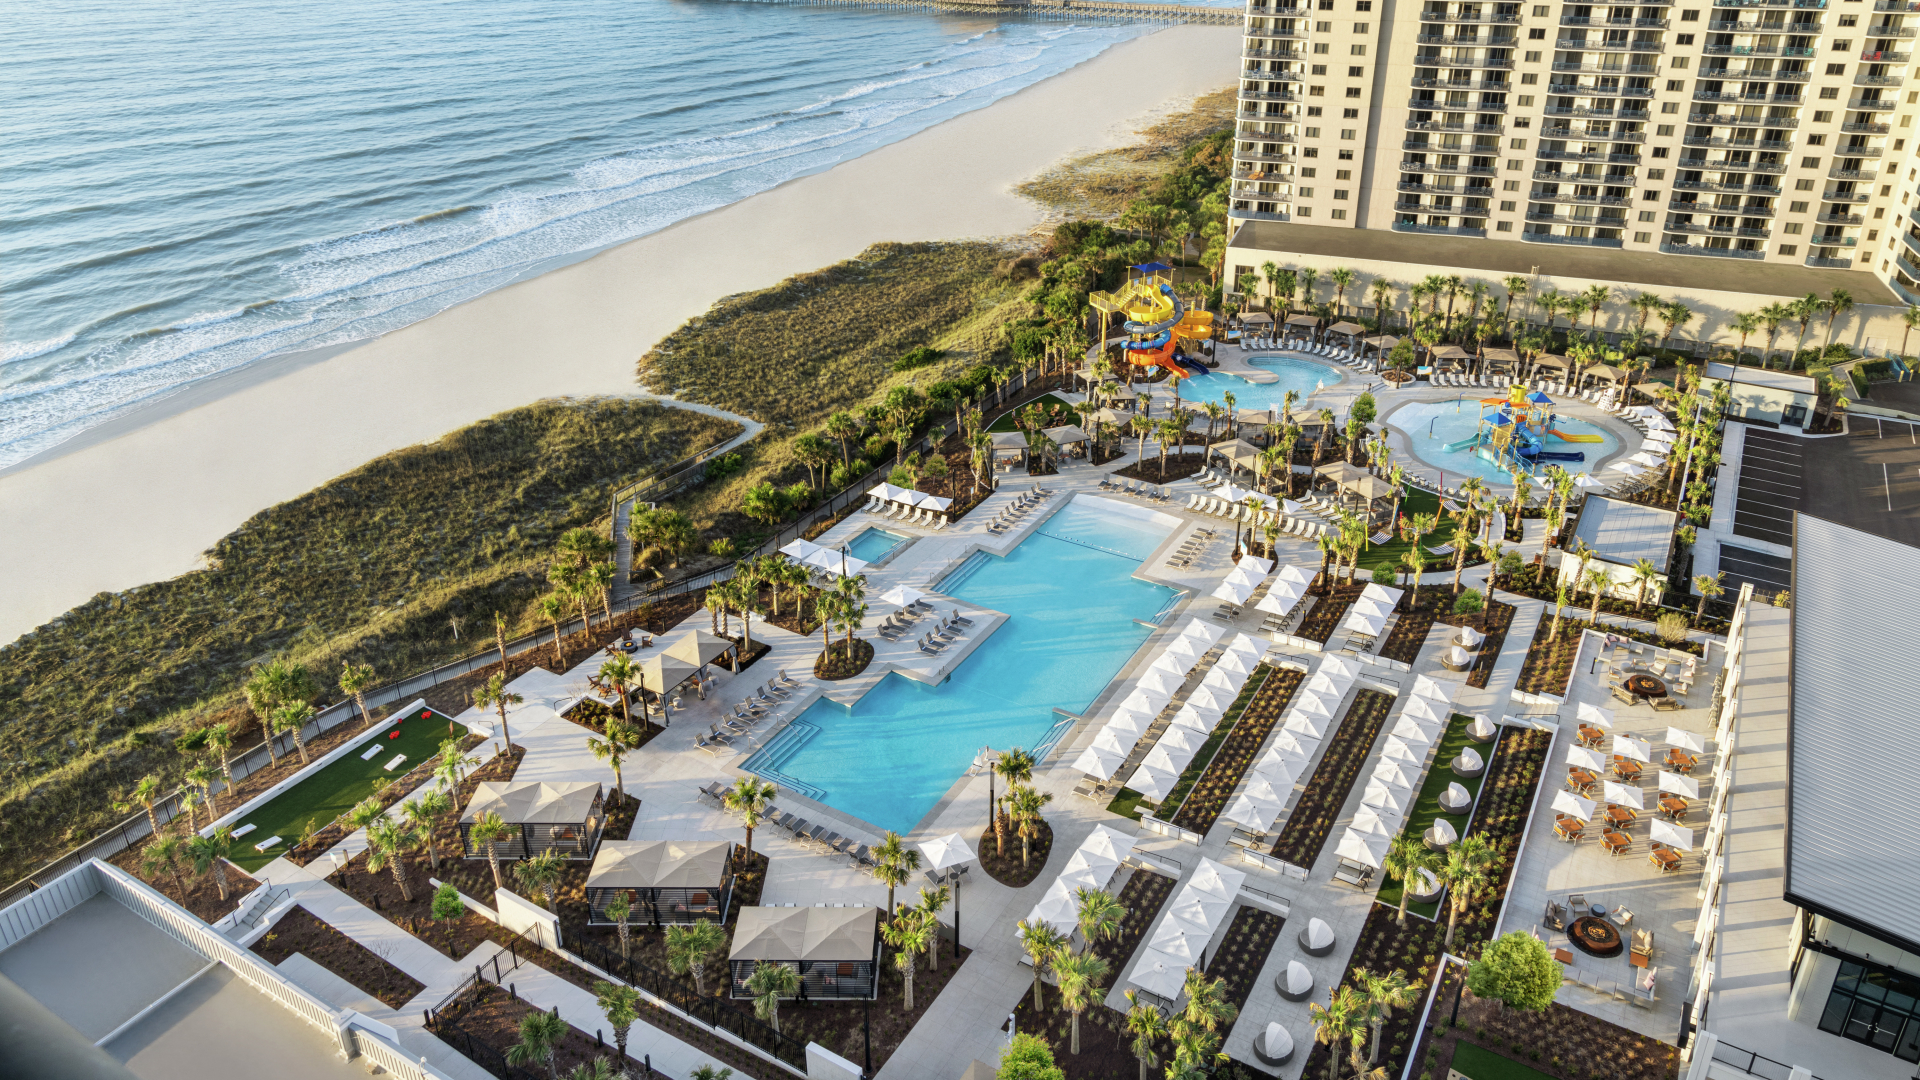 Photo of Embassy Suites by Hilton Myrtle Beach Oceanfront Resort, Myrtle Beach, SC